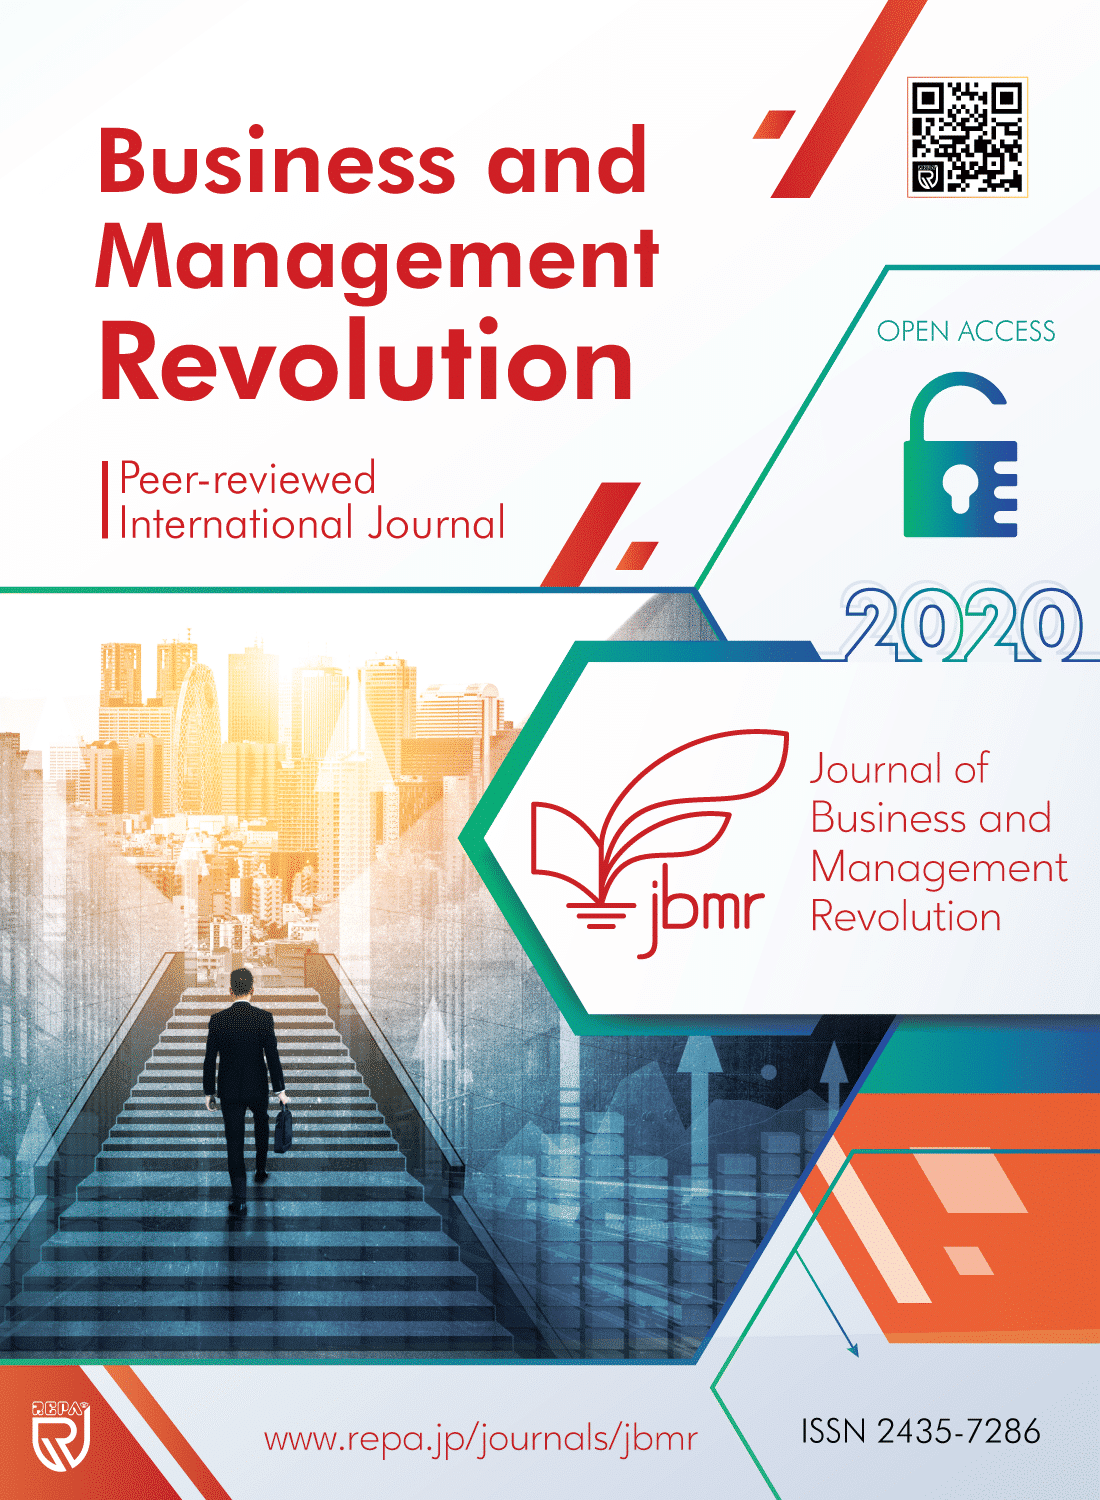 Journal of Business and Management Revolution - JBMR